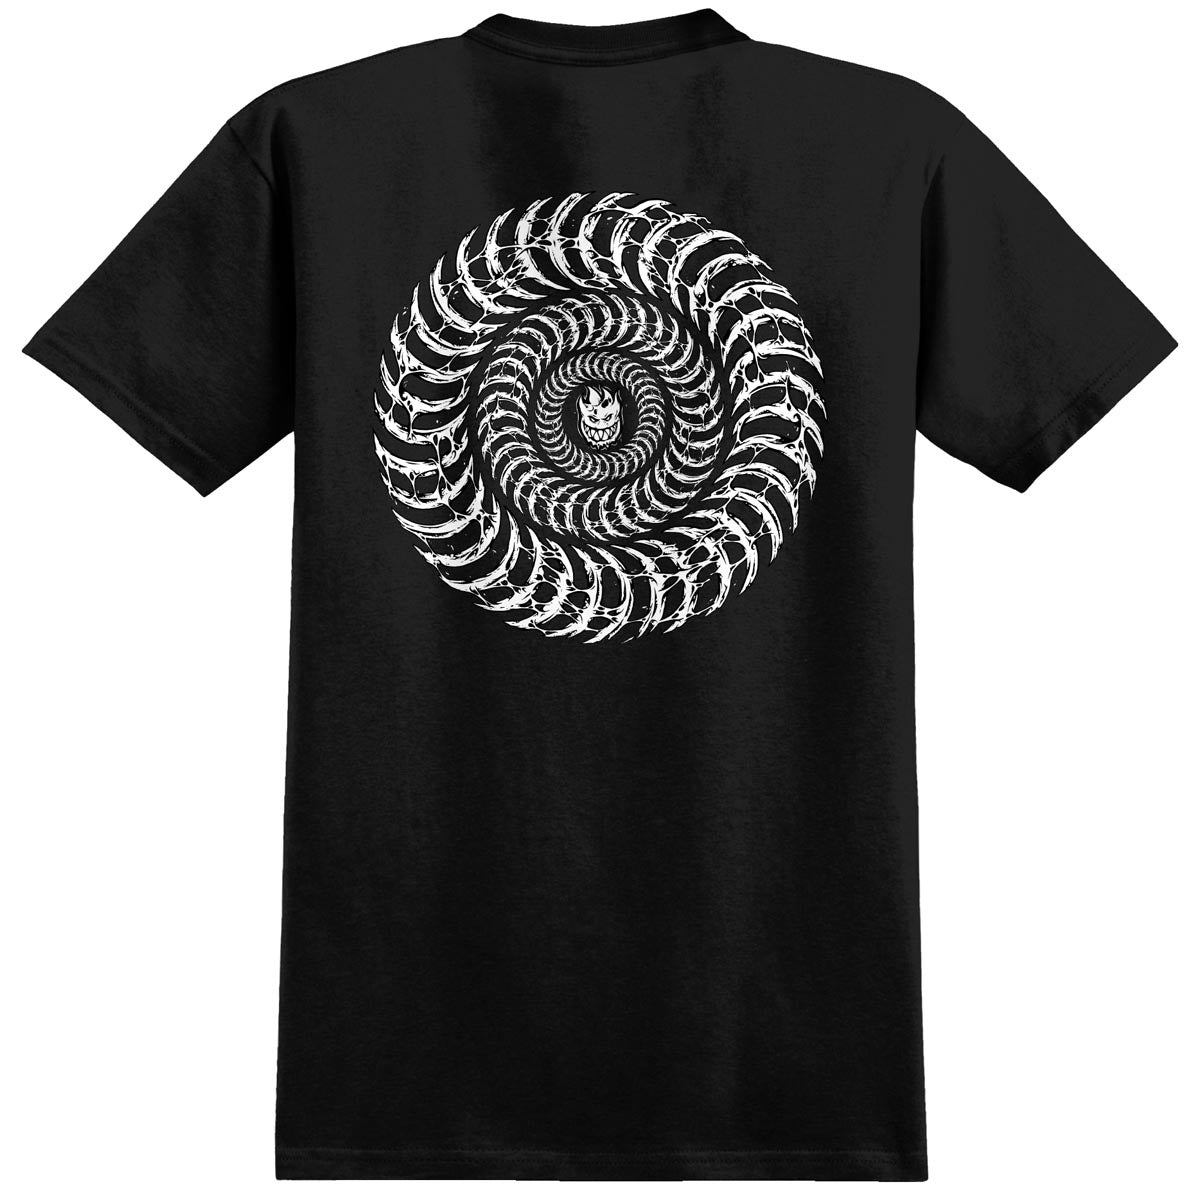 Spitfire Decay Classic Swirl T-Shirt - Black image 1